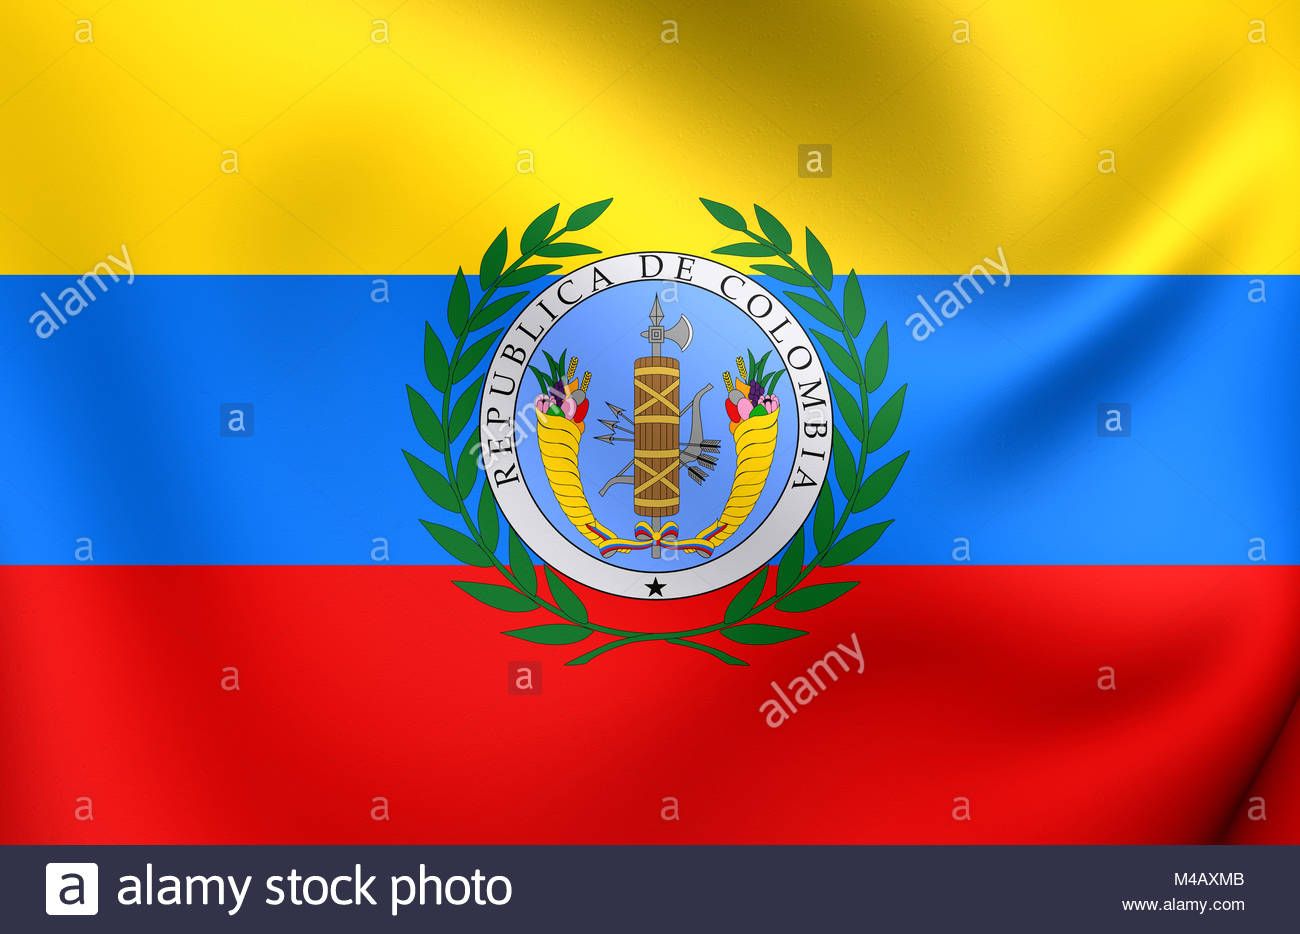 La gran Colombia potencia??